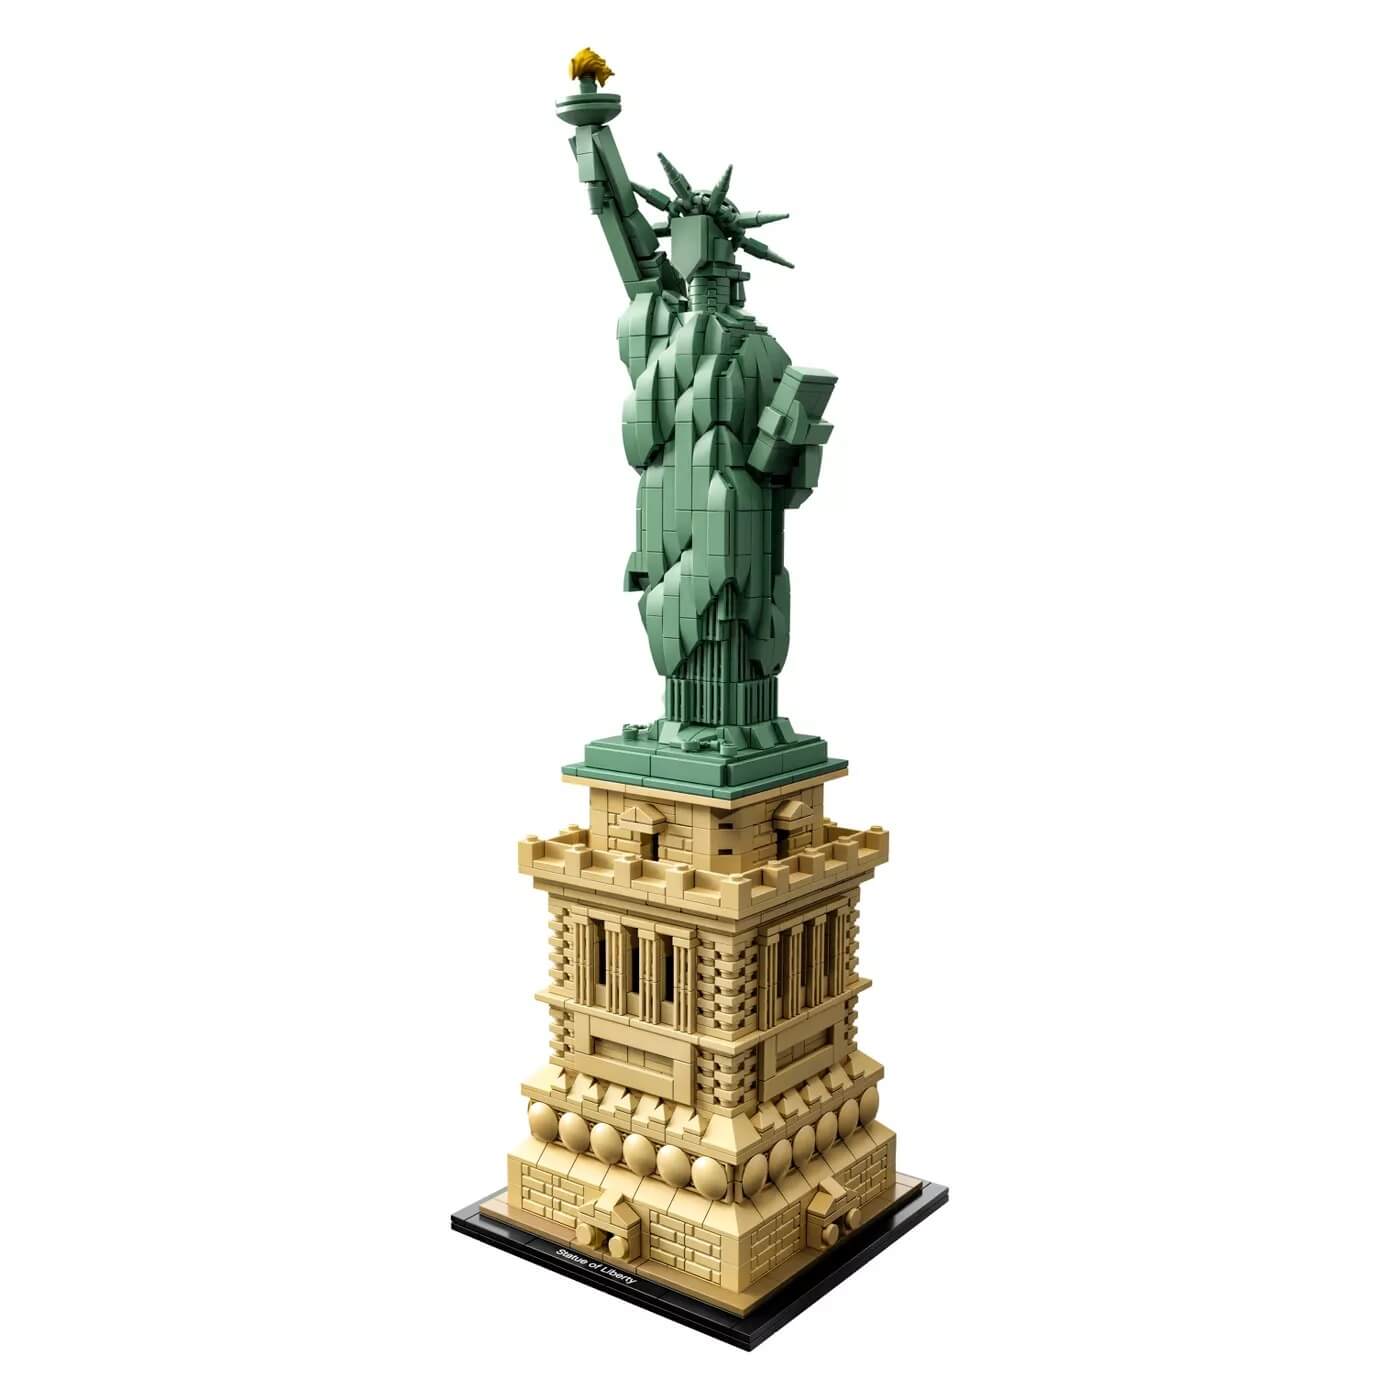 LEGO Architecture Statue of Liberty 1685 Piece Building Set (21042)